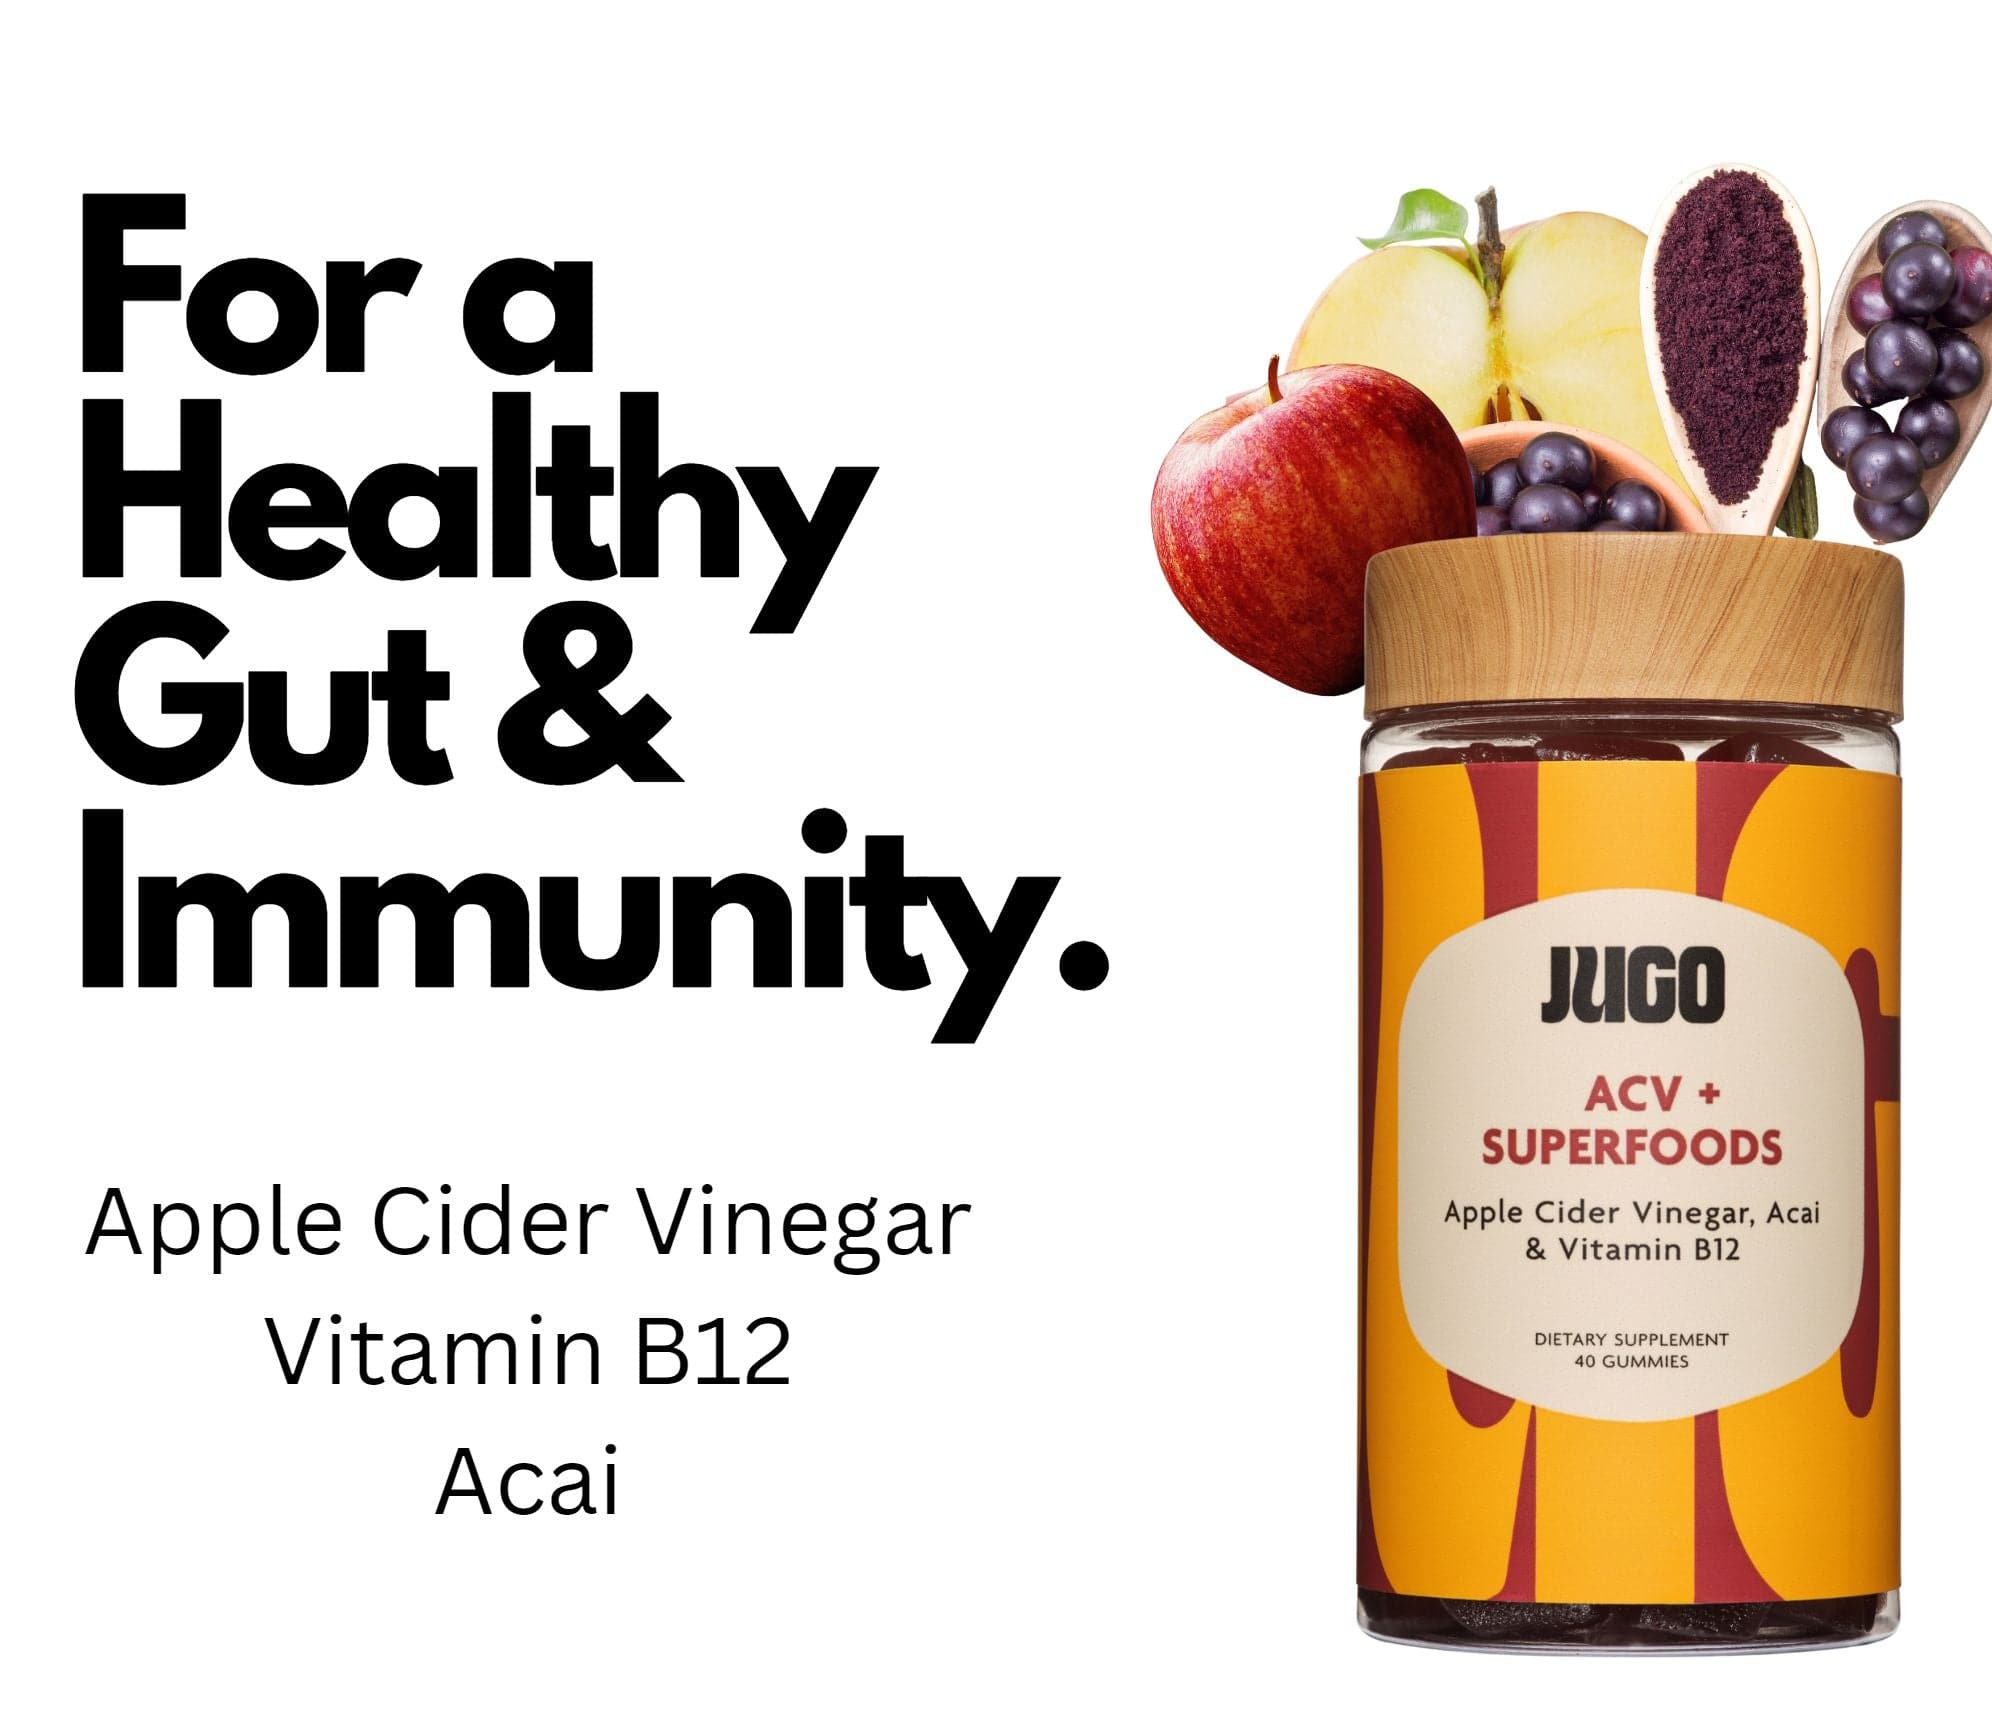 Apple cider vinegar supplements that improve gut health and immunity